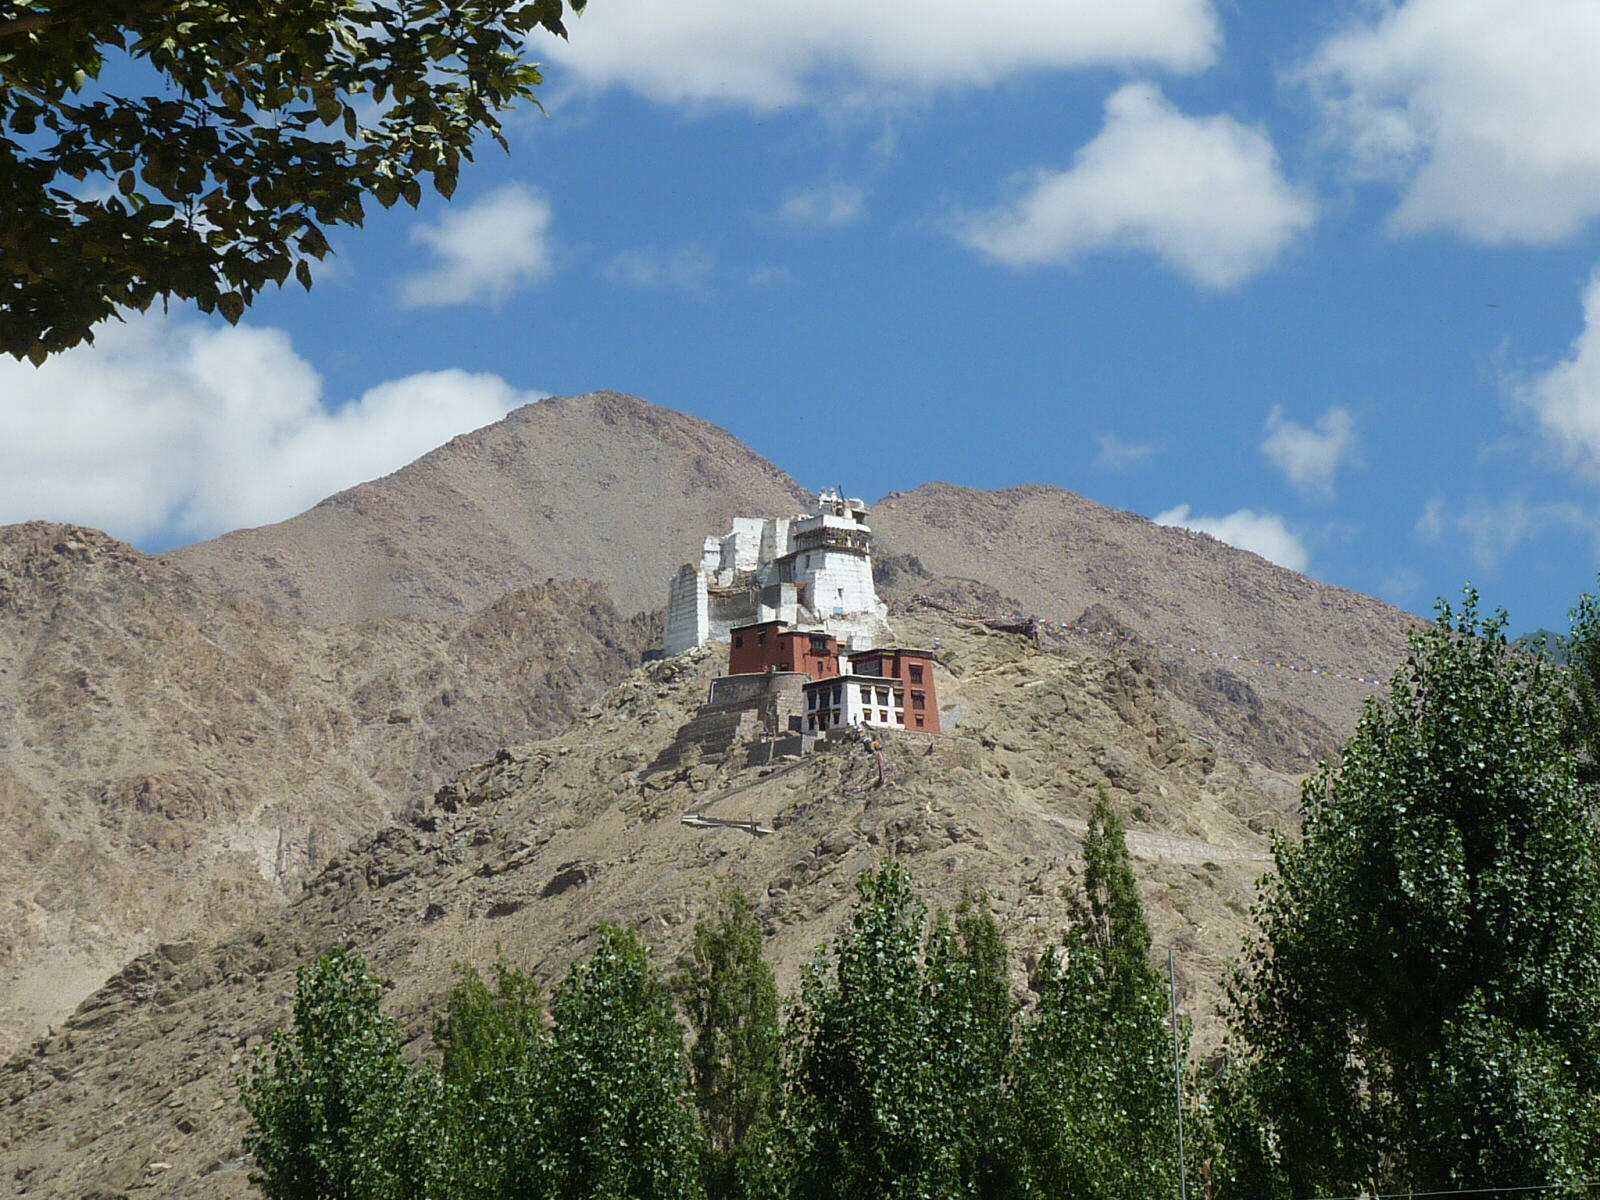 Tsemo Gompa (temple) near Leh in Ladakh, India